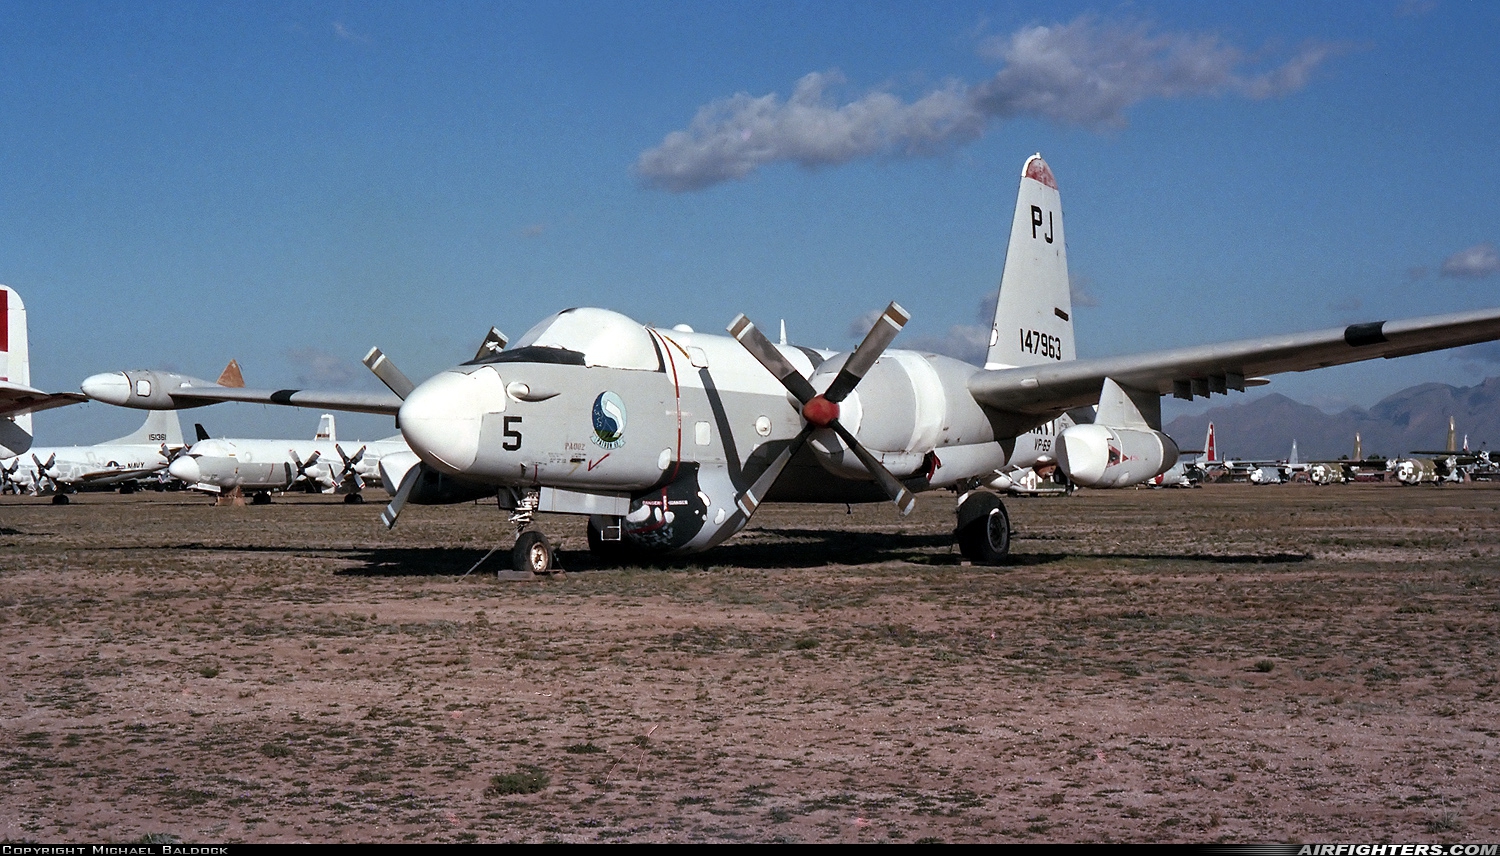 USA - Navy Lockheed SP-2H Neptune 147963 at Tucson - Davis-Monthan AFB (DMA / KDMA), USA